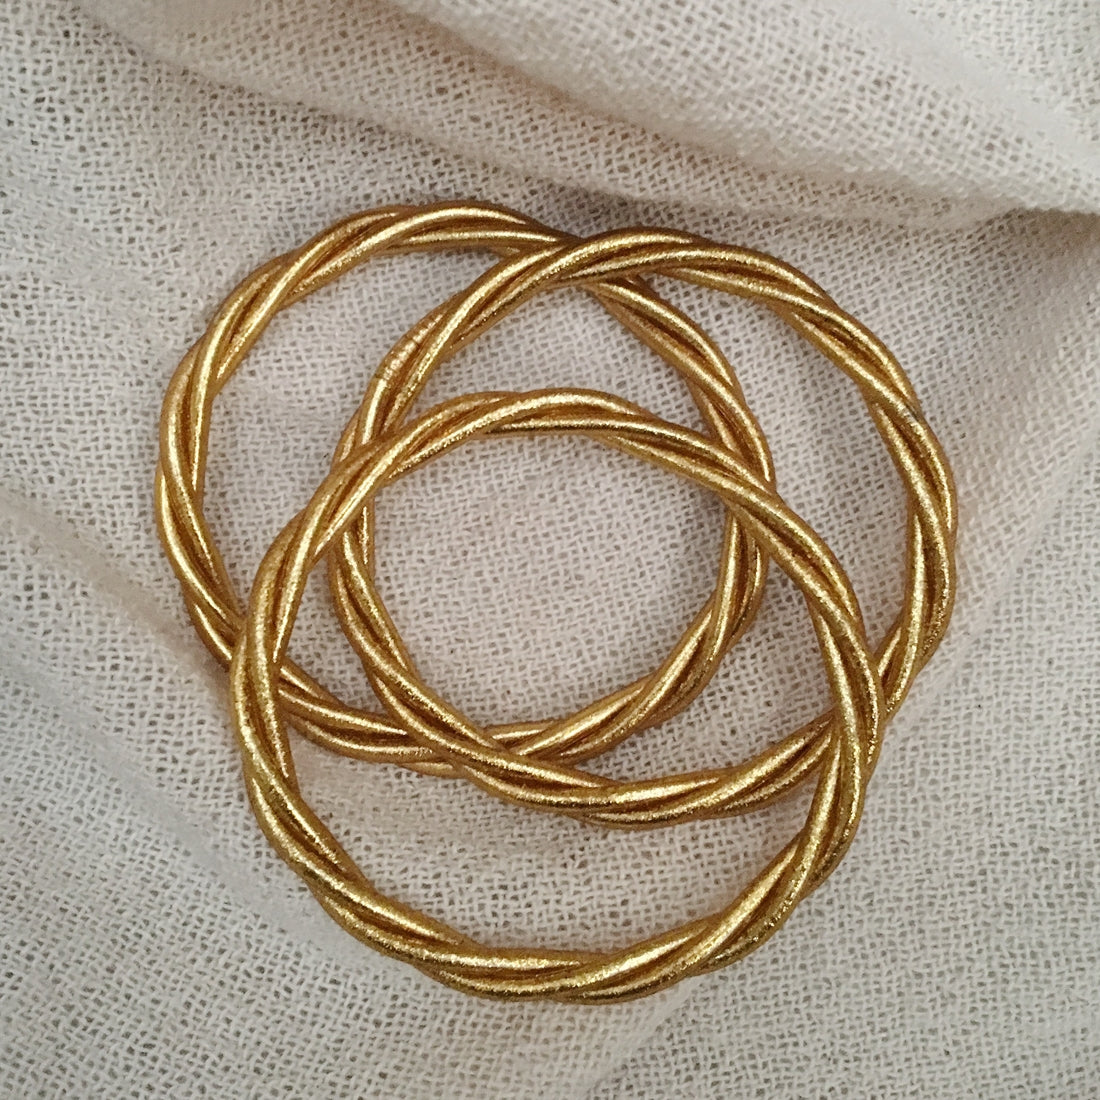 Golden Twisted Buddhist Bracelet - thick model